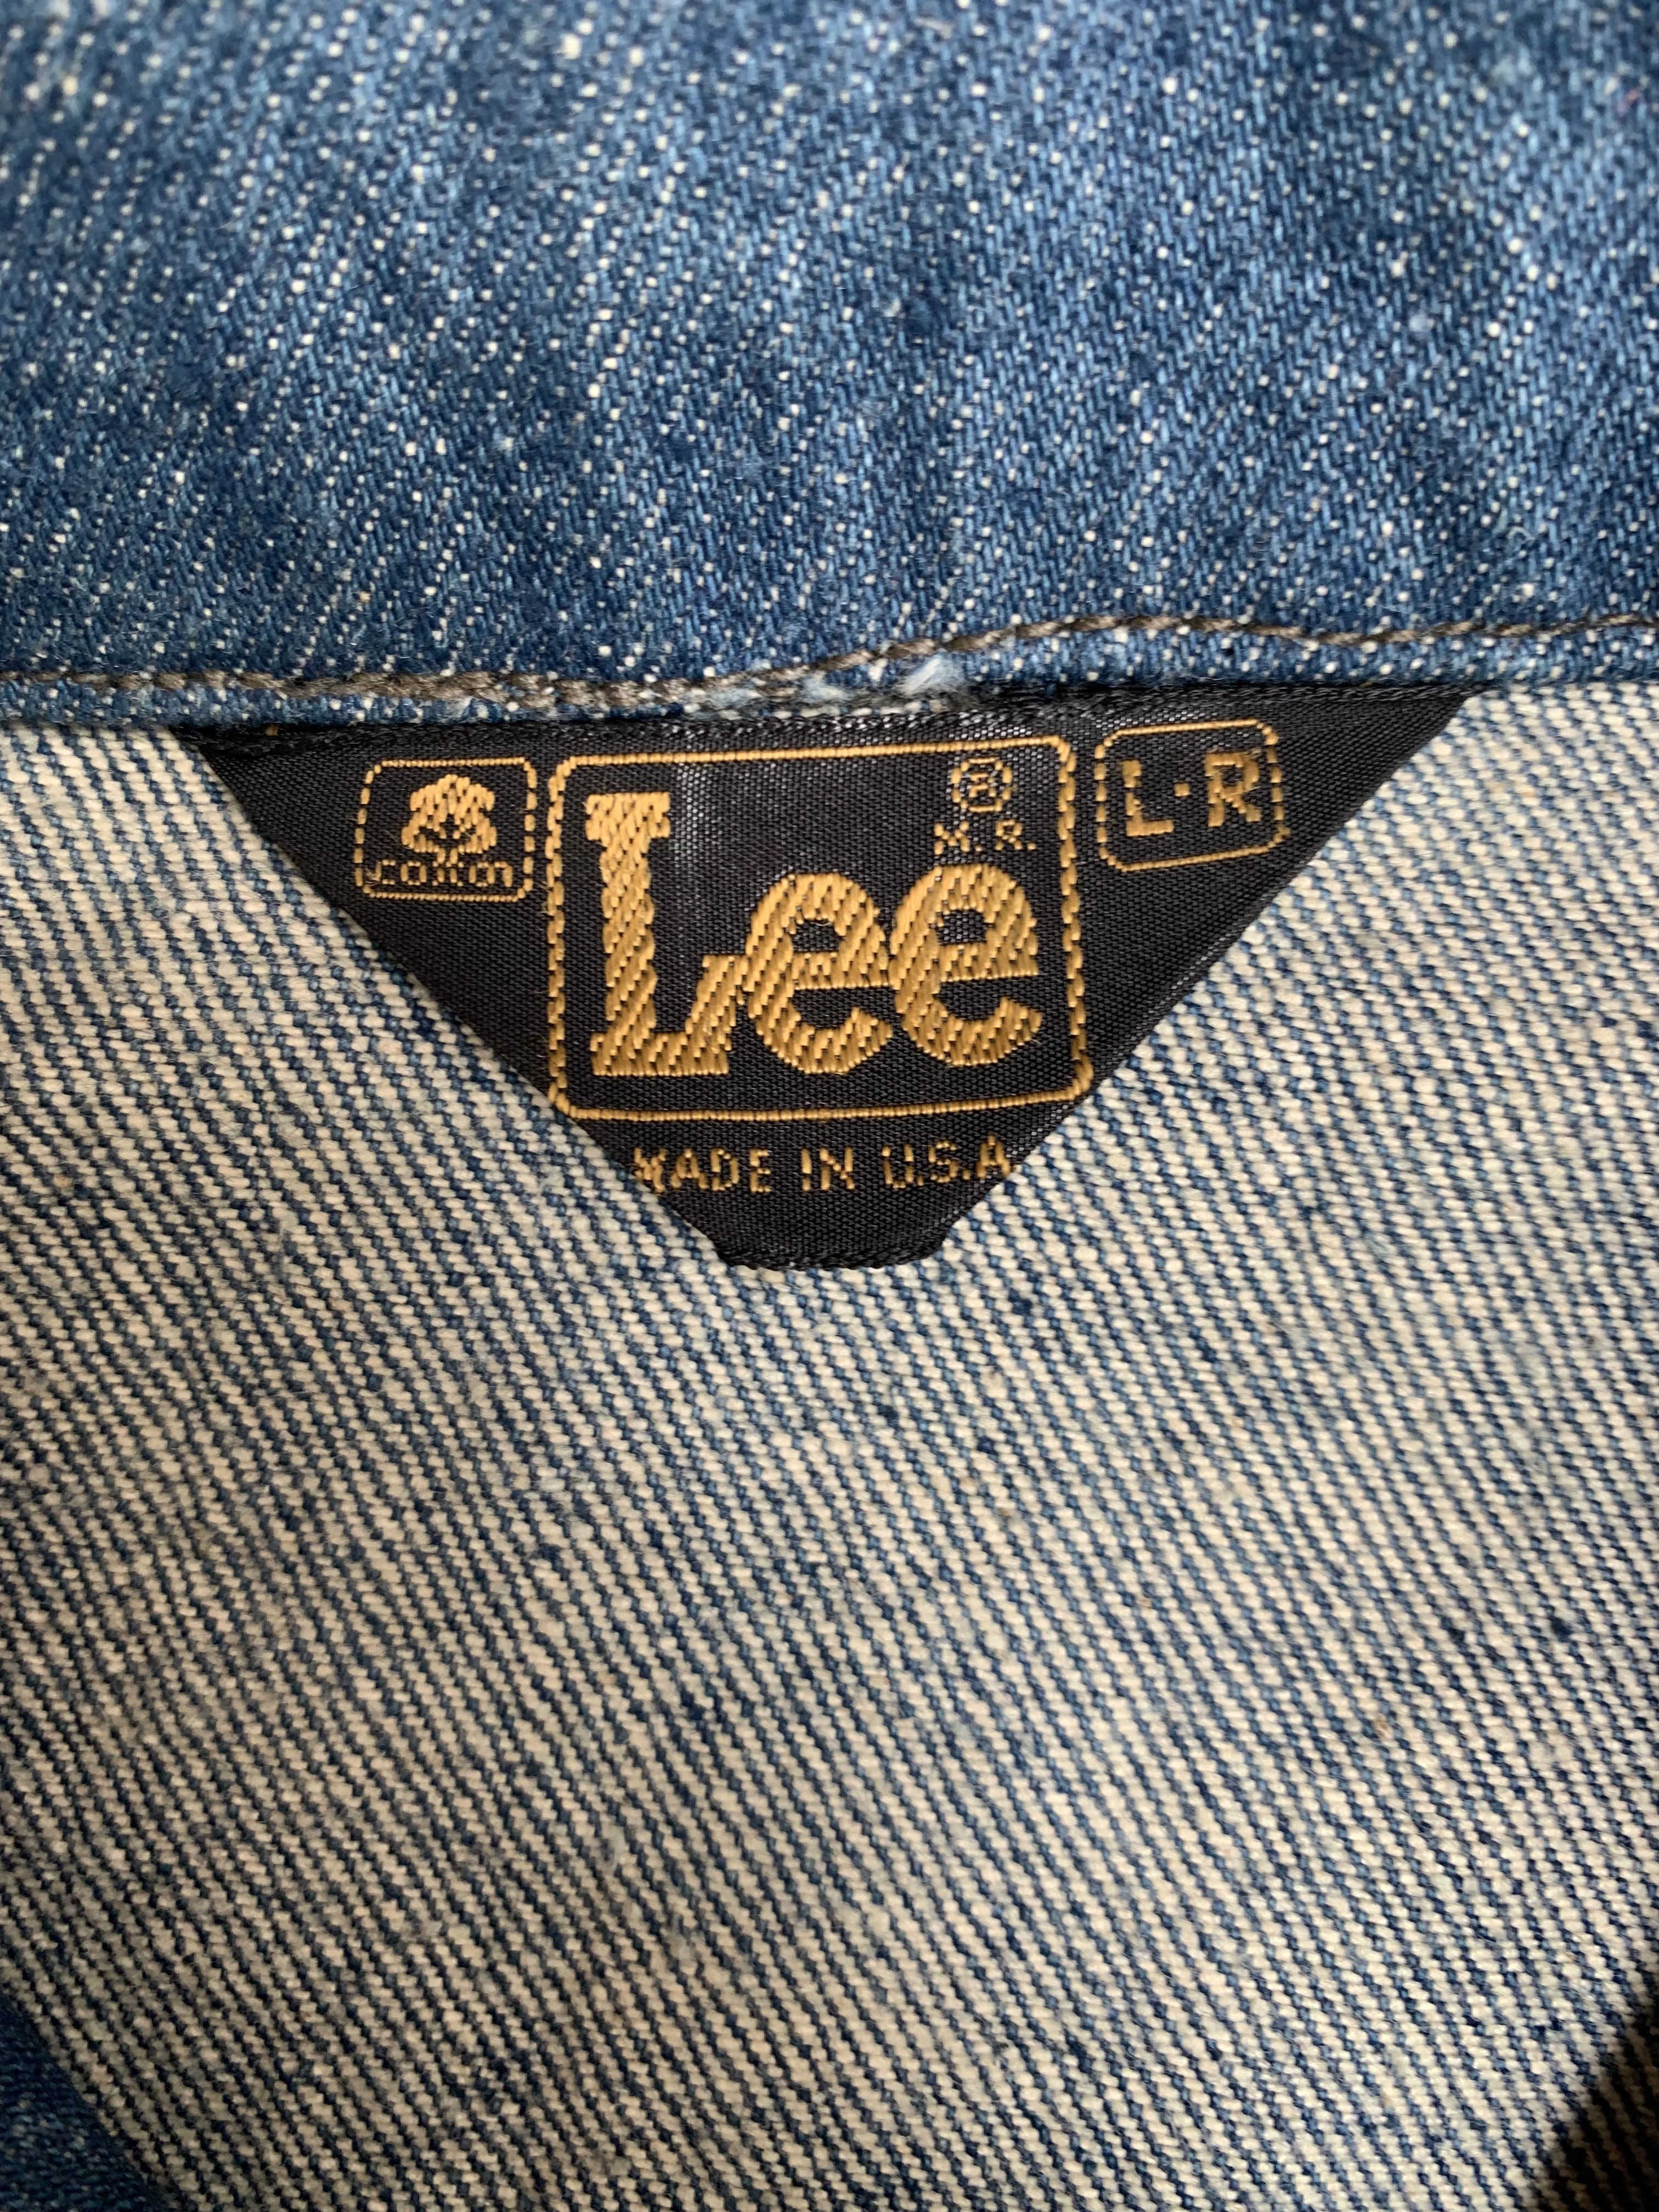 Vintage 70//80s Lee Safari Denim Jacket Made in USA - 7